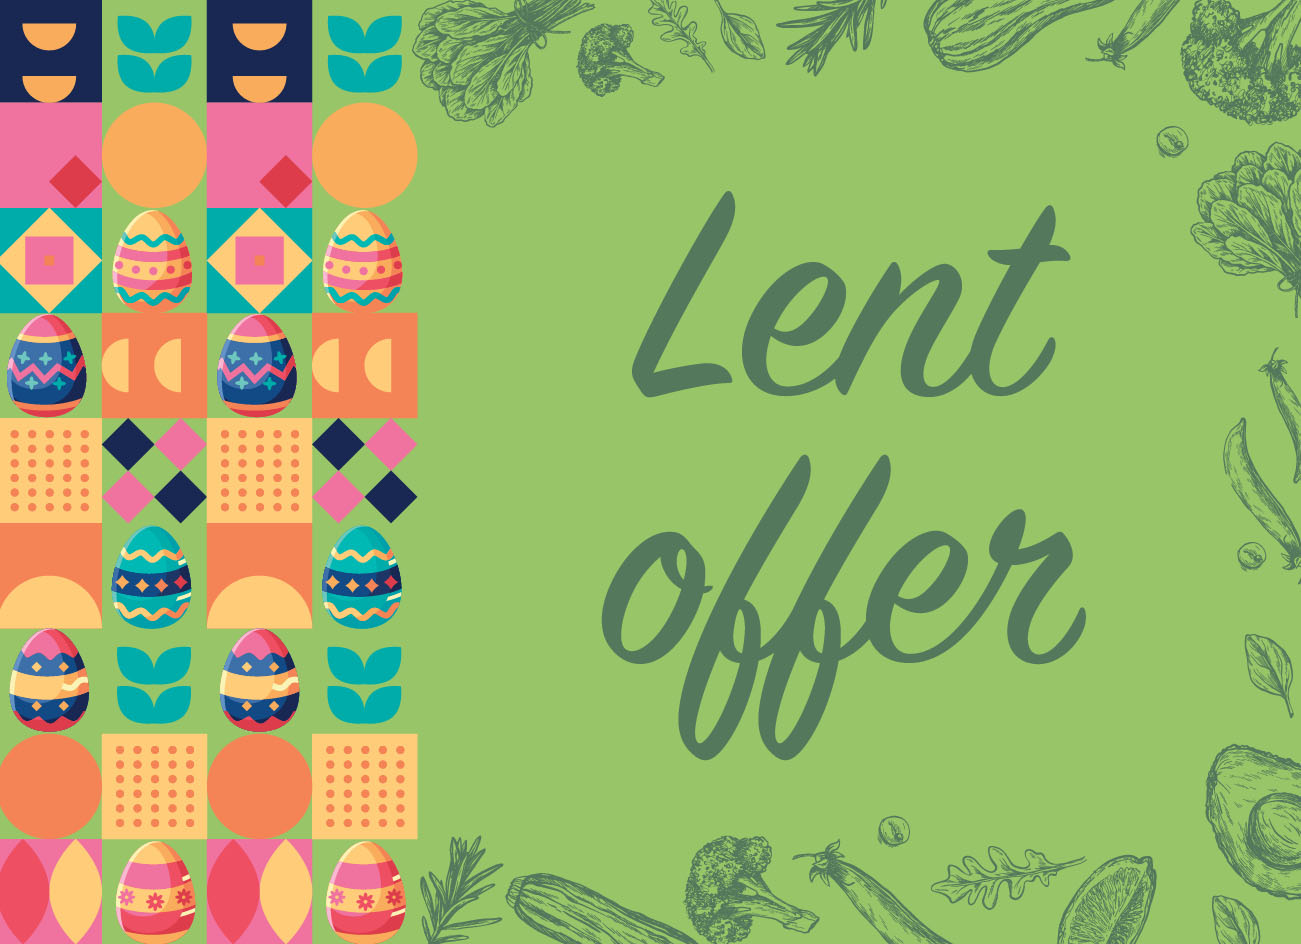 The Great Lent offer at Cosmopolite: enjoy!